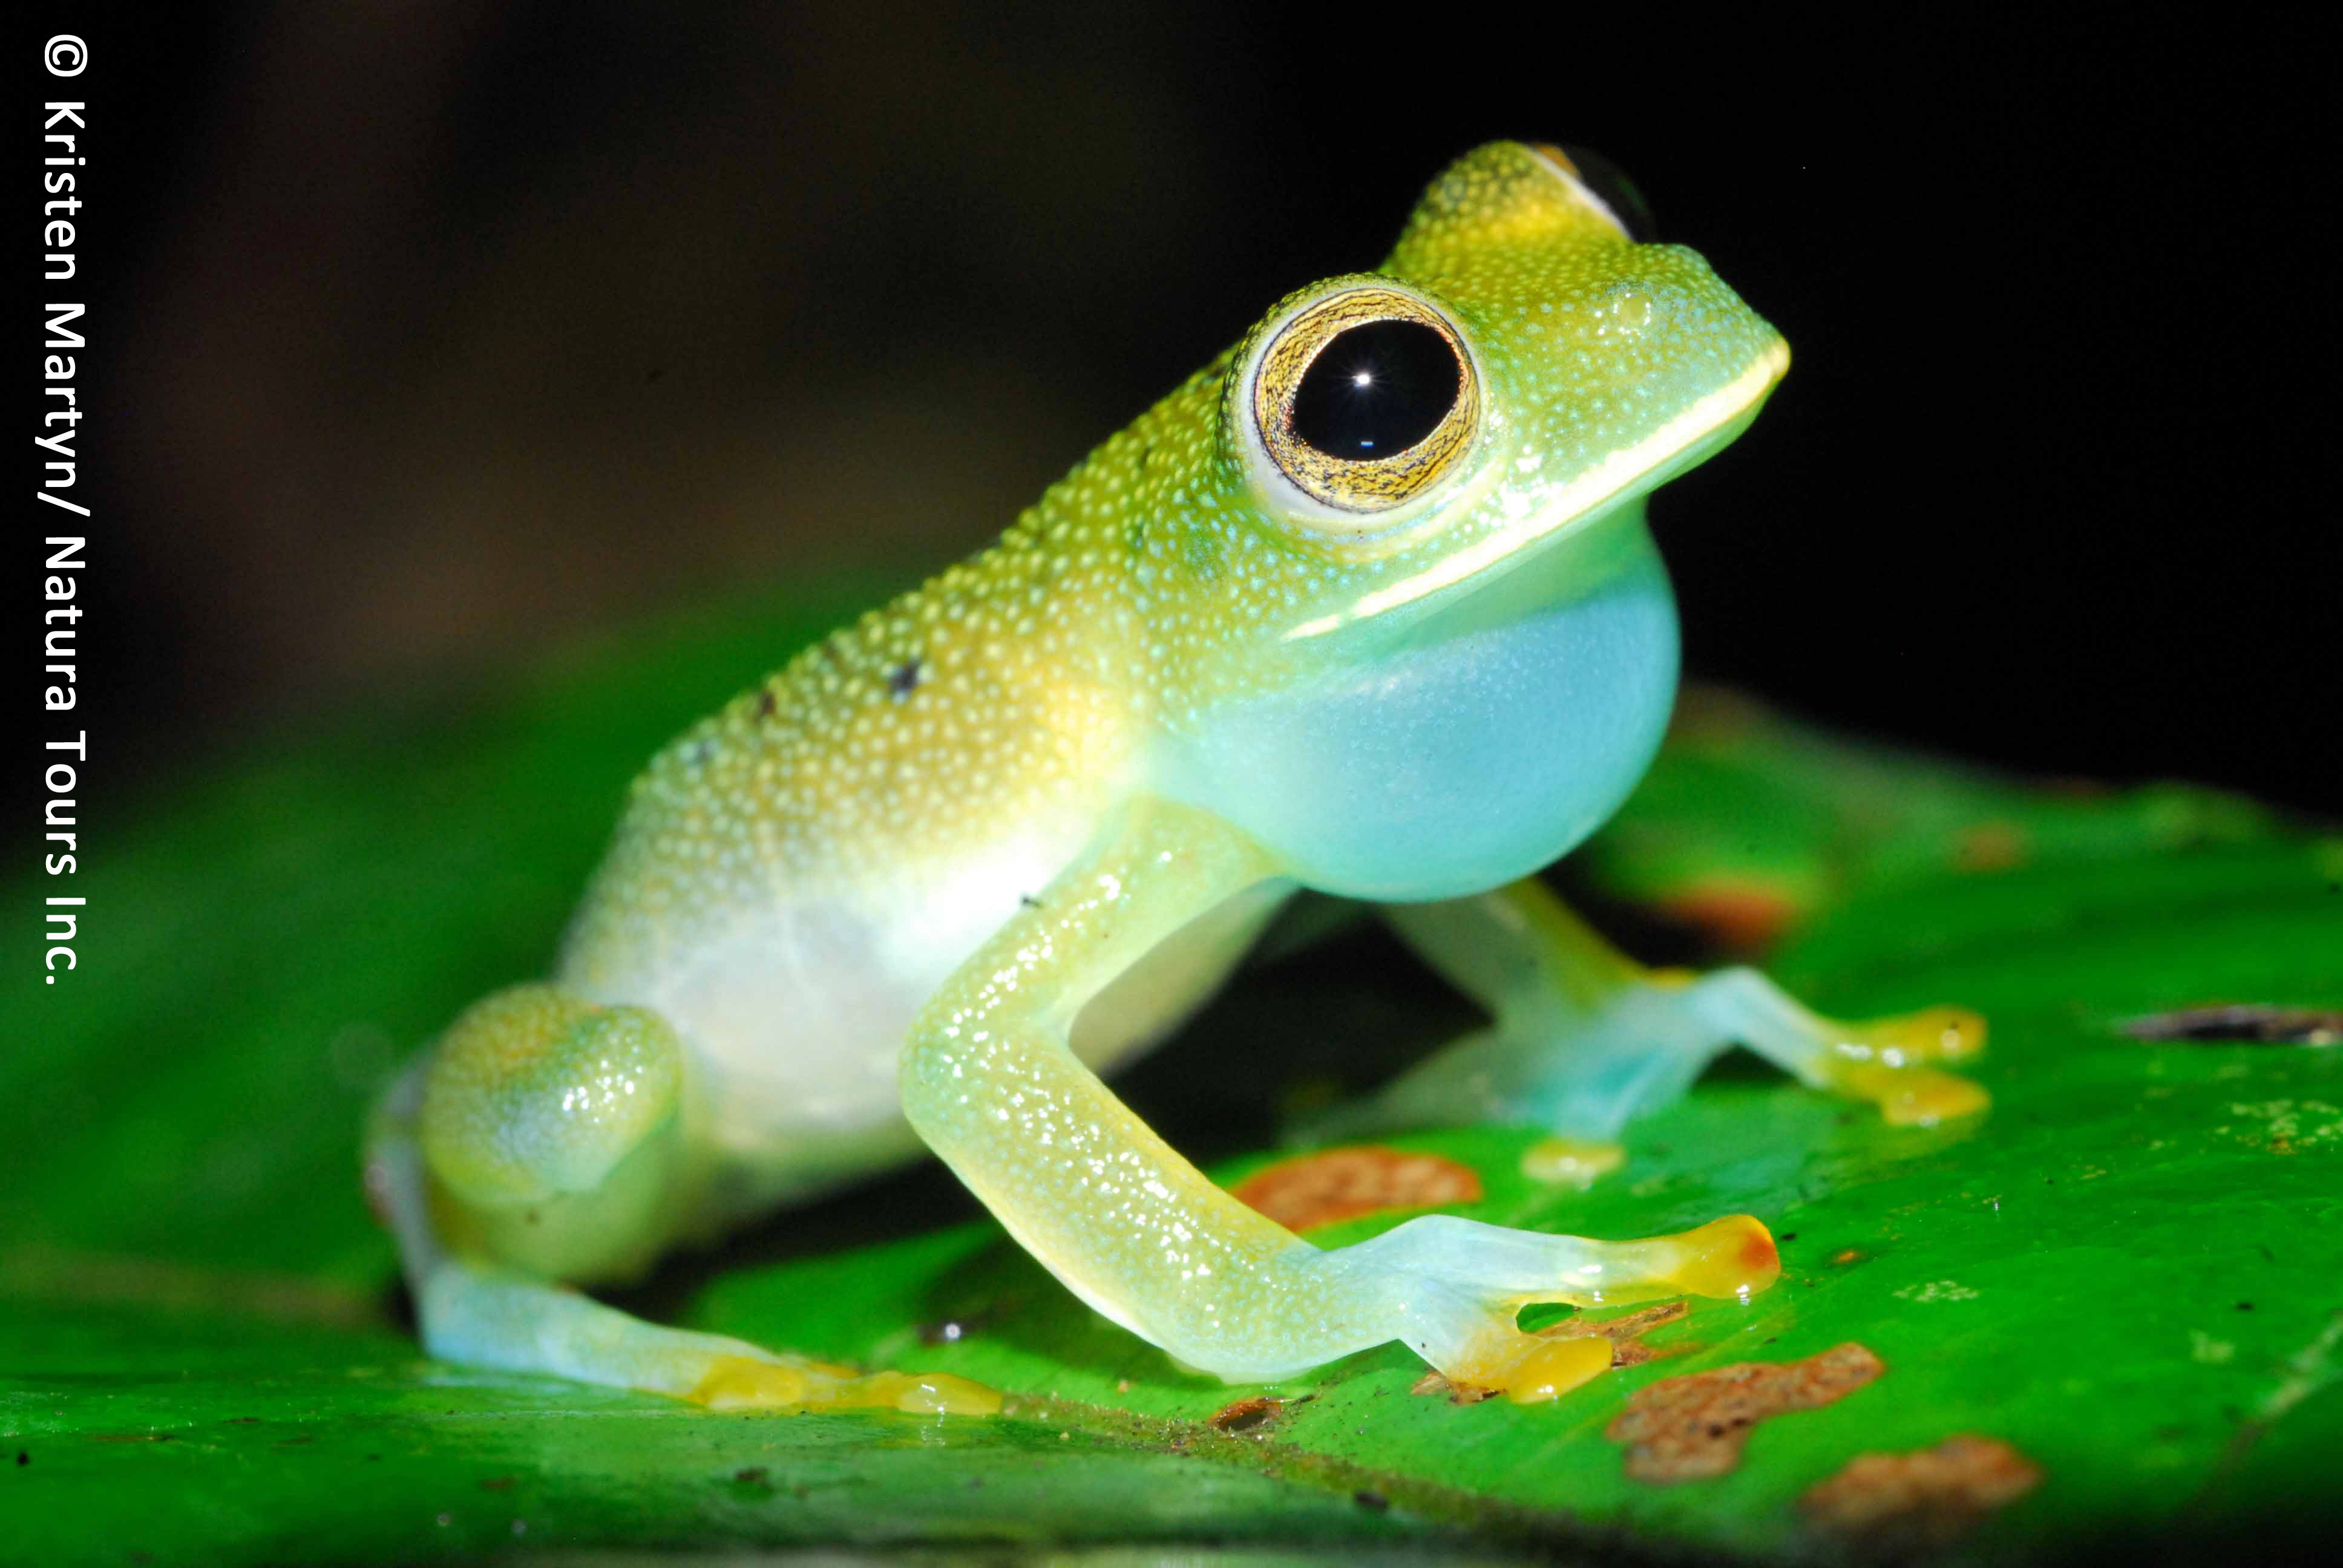 Granular glass frog (Cochranella granulosa)